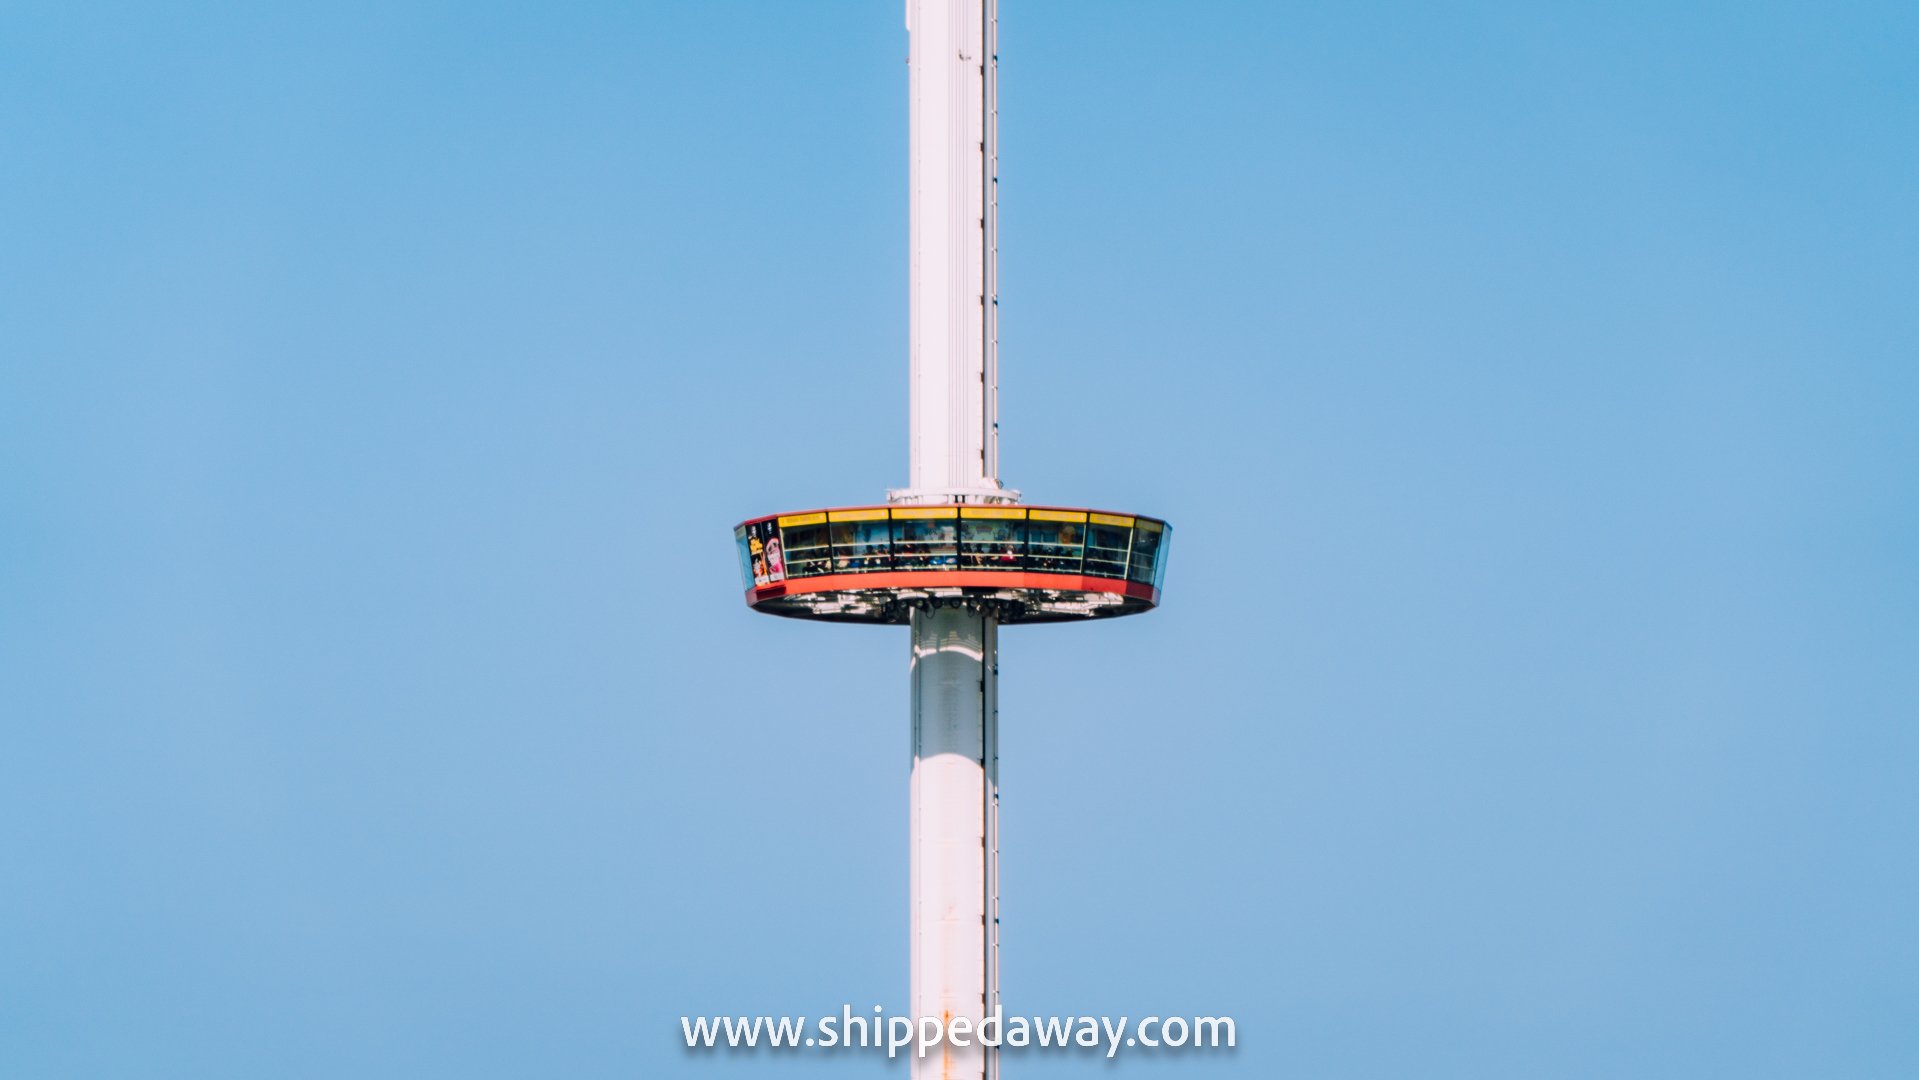 Taming Sari Revolving Tower 360 observatory in Melaka, Malaysia